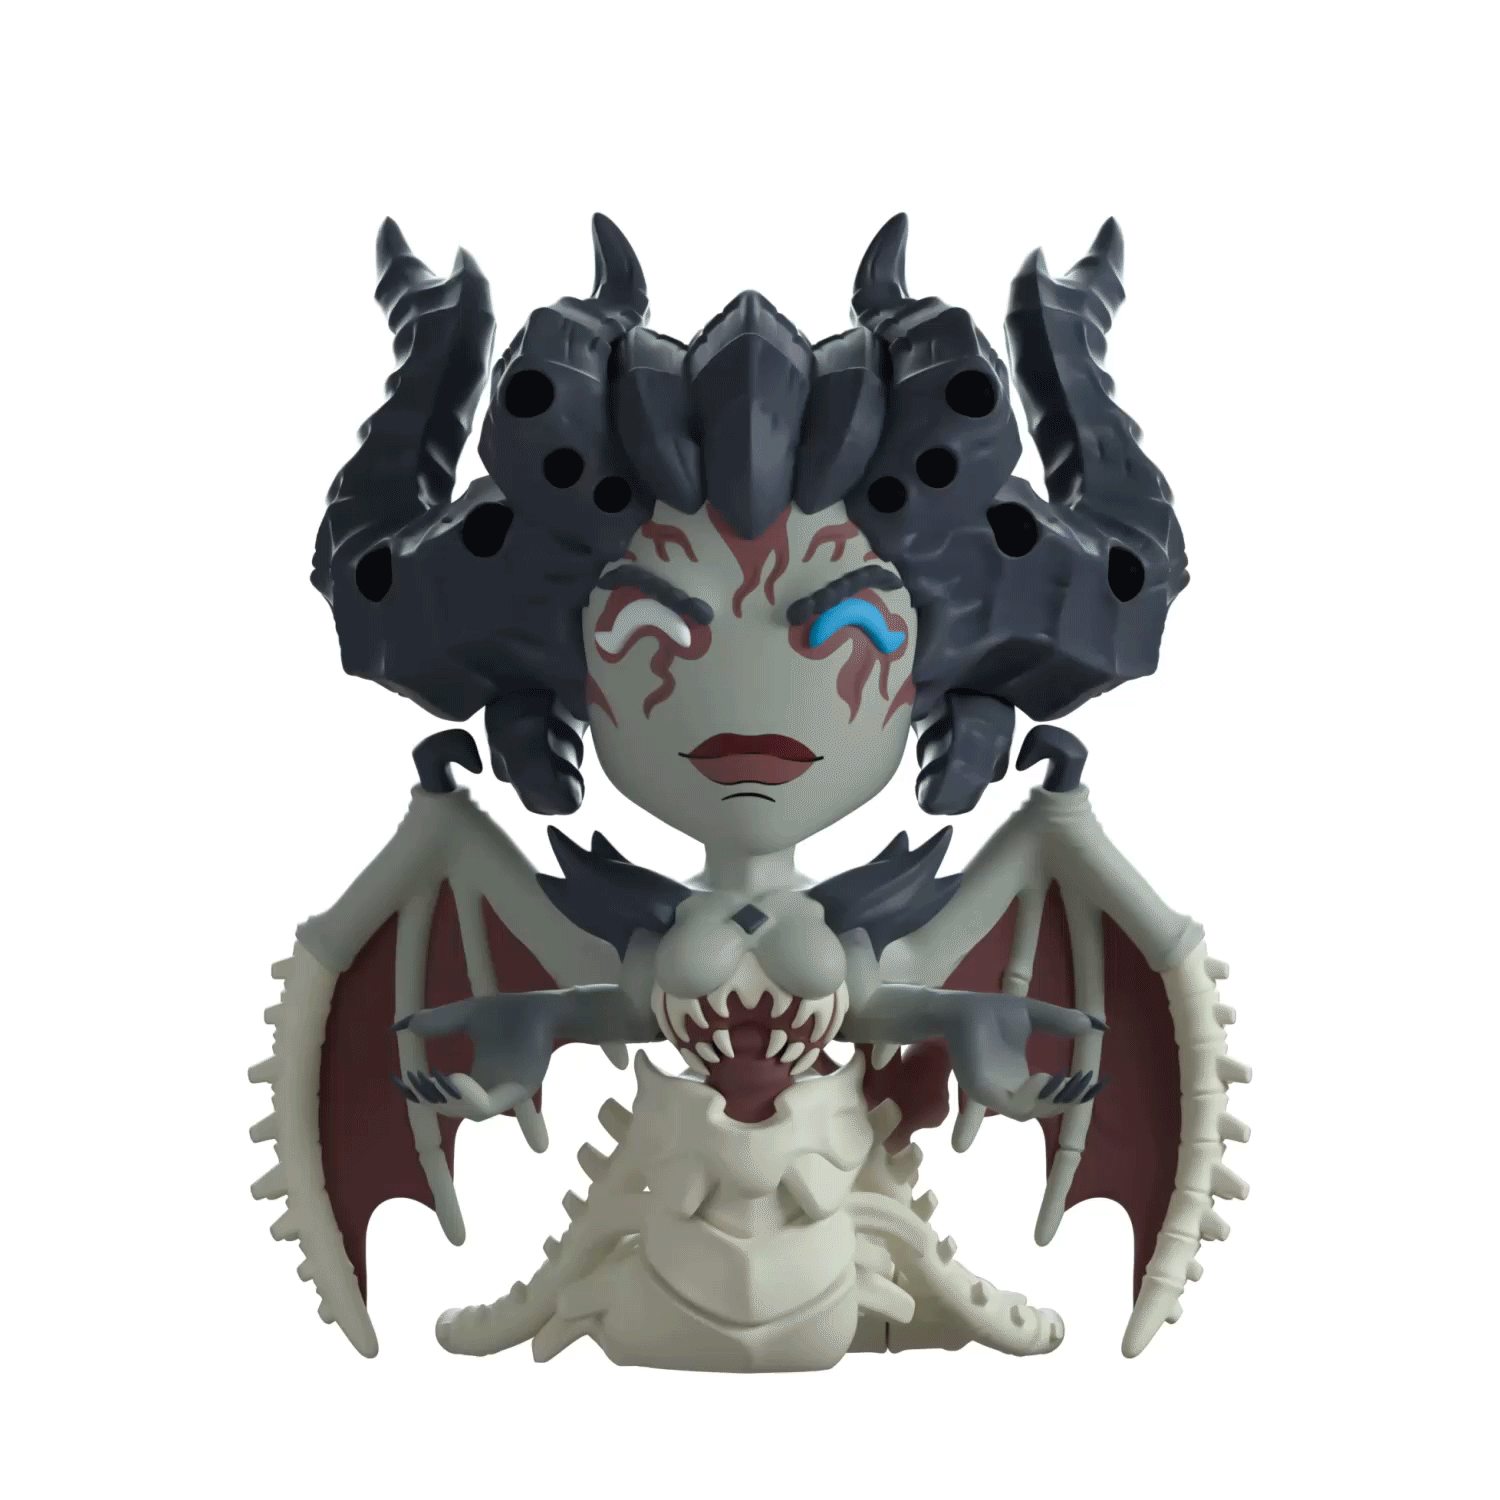 Diablo IV Lilith Youtooz Figurine - Rotating Gif View